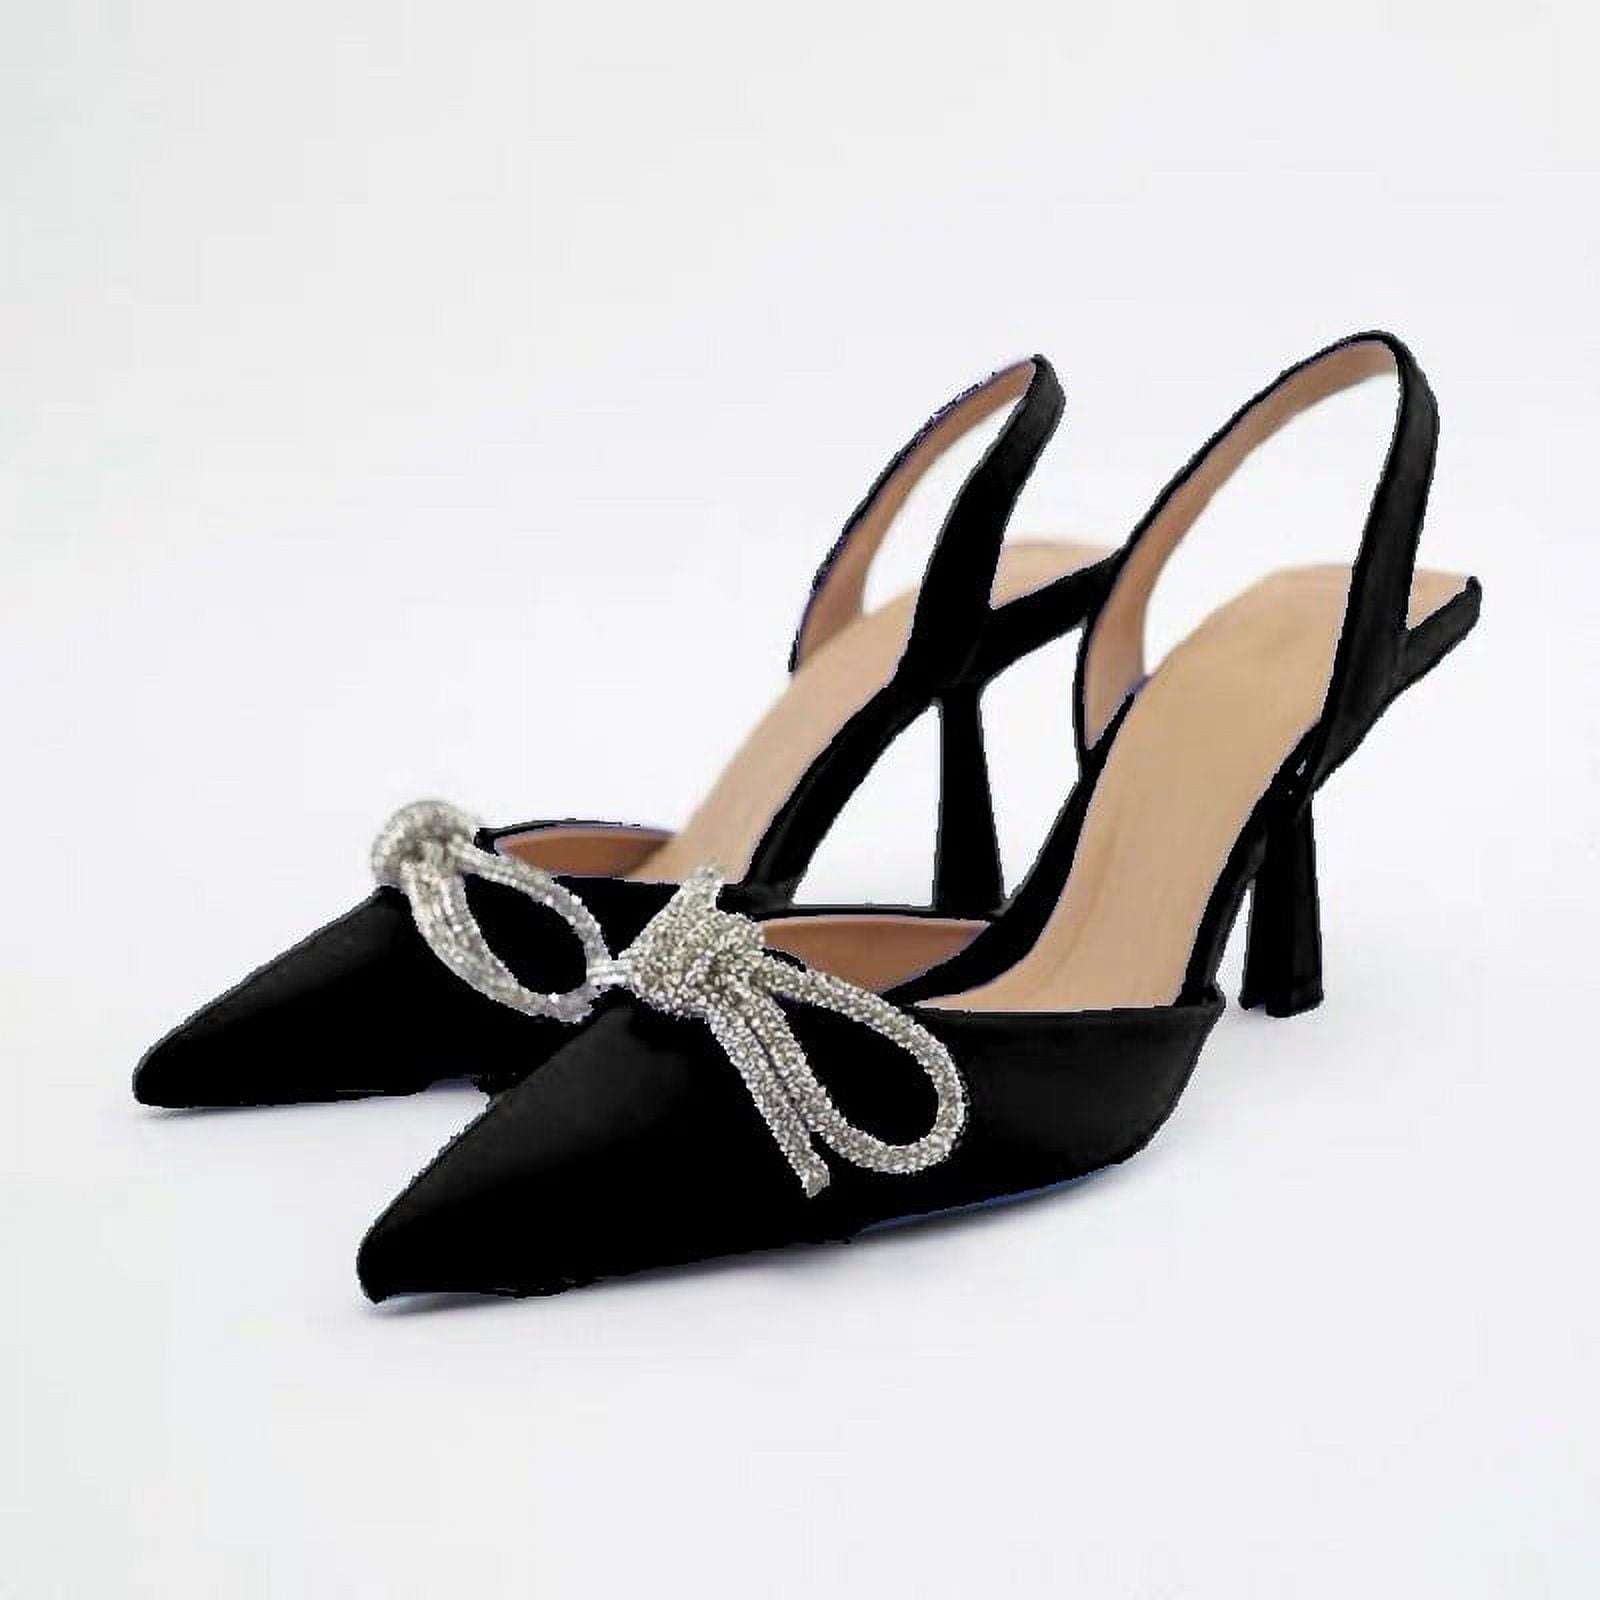 Shiny Black Rhinestone Heels | Super high heels, Heels, Black sandals heels